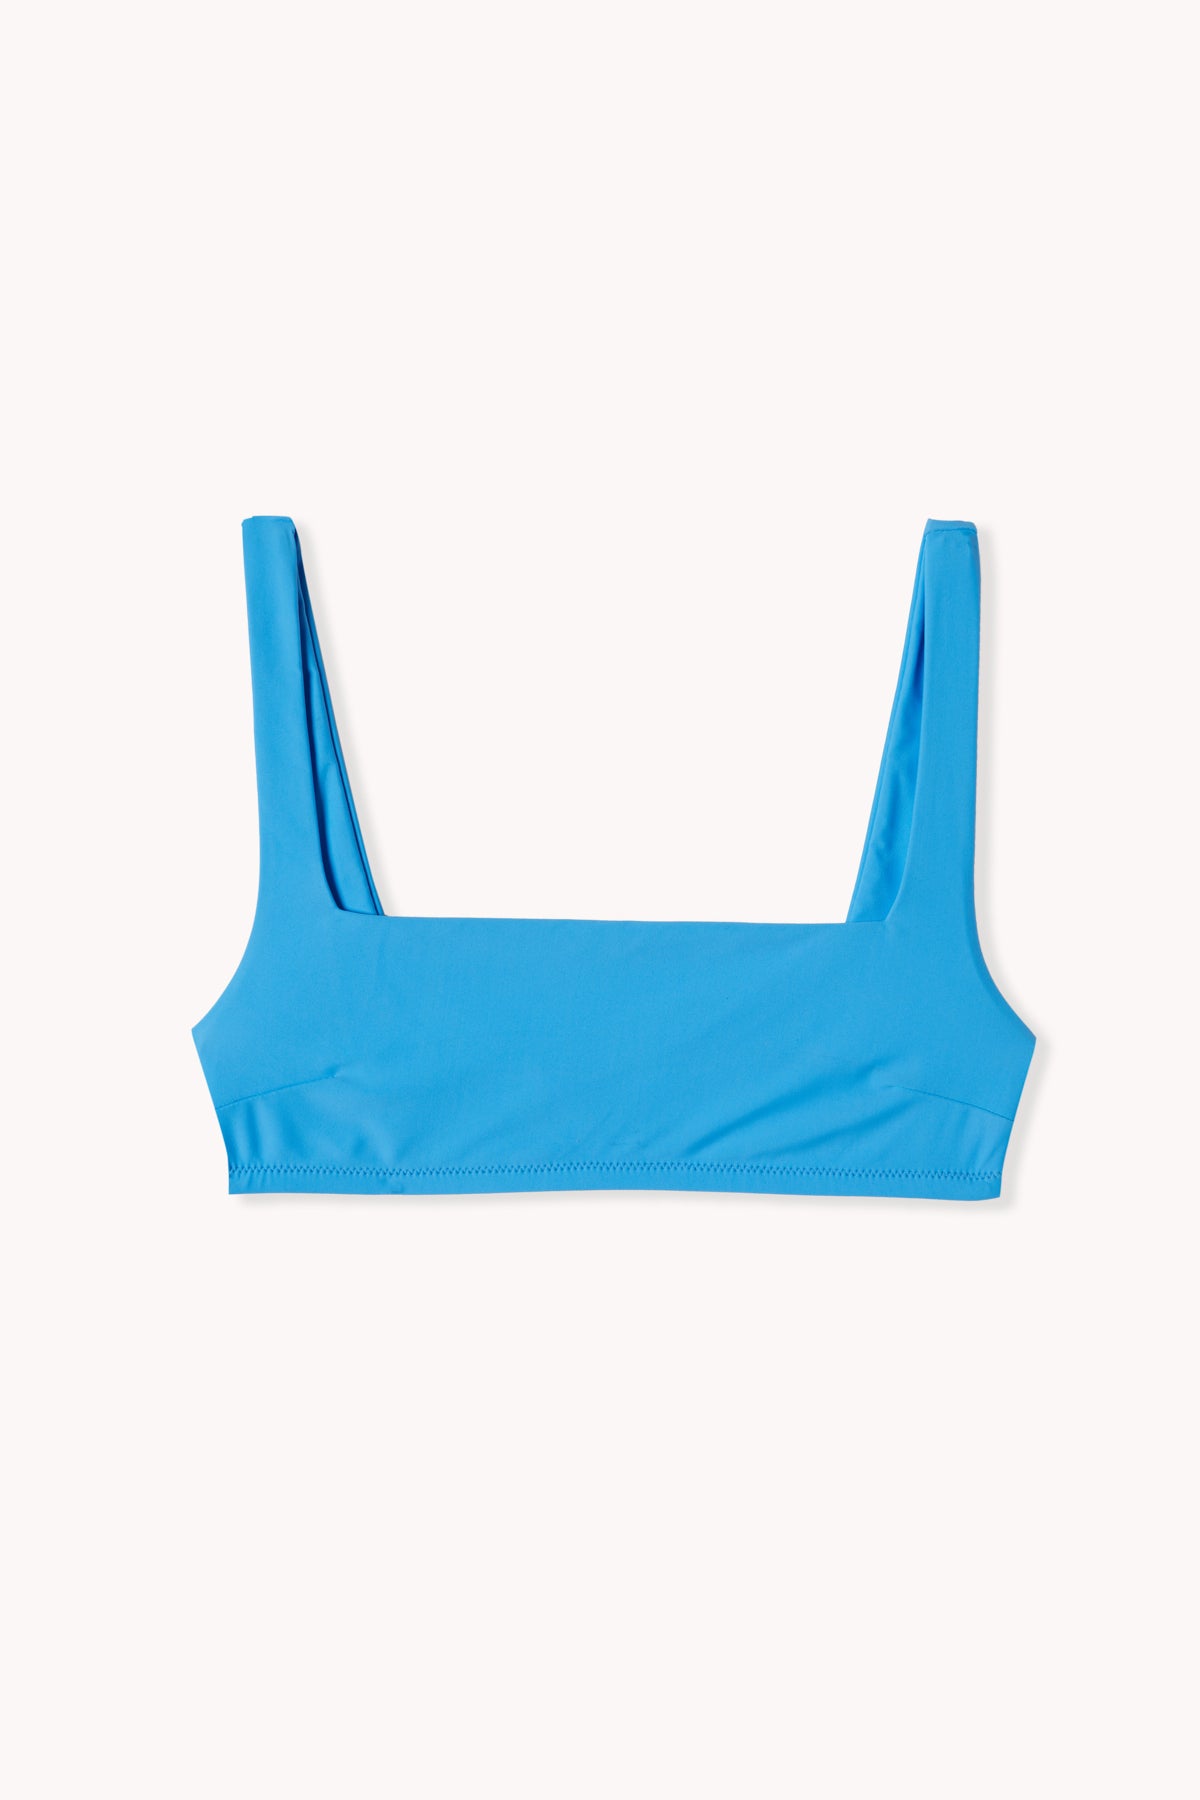 Oslo Bikini Top in Flag Blue | Ookioh - Modern Swimwear for Women